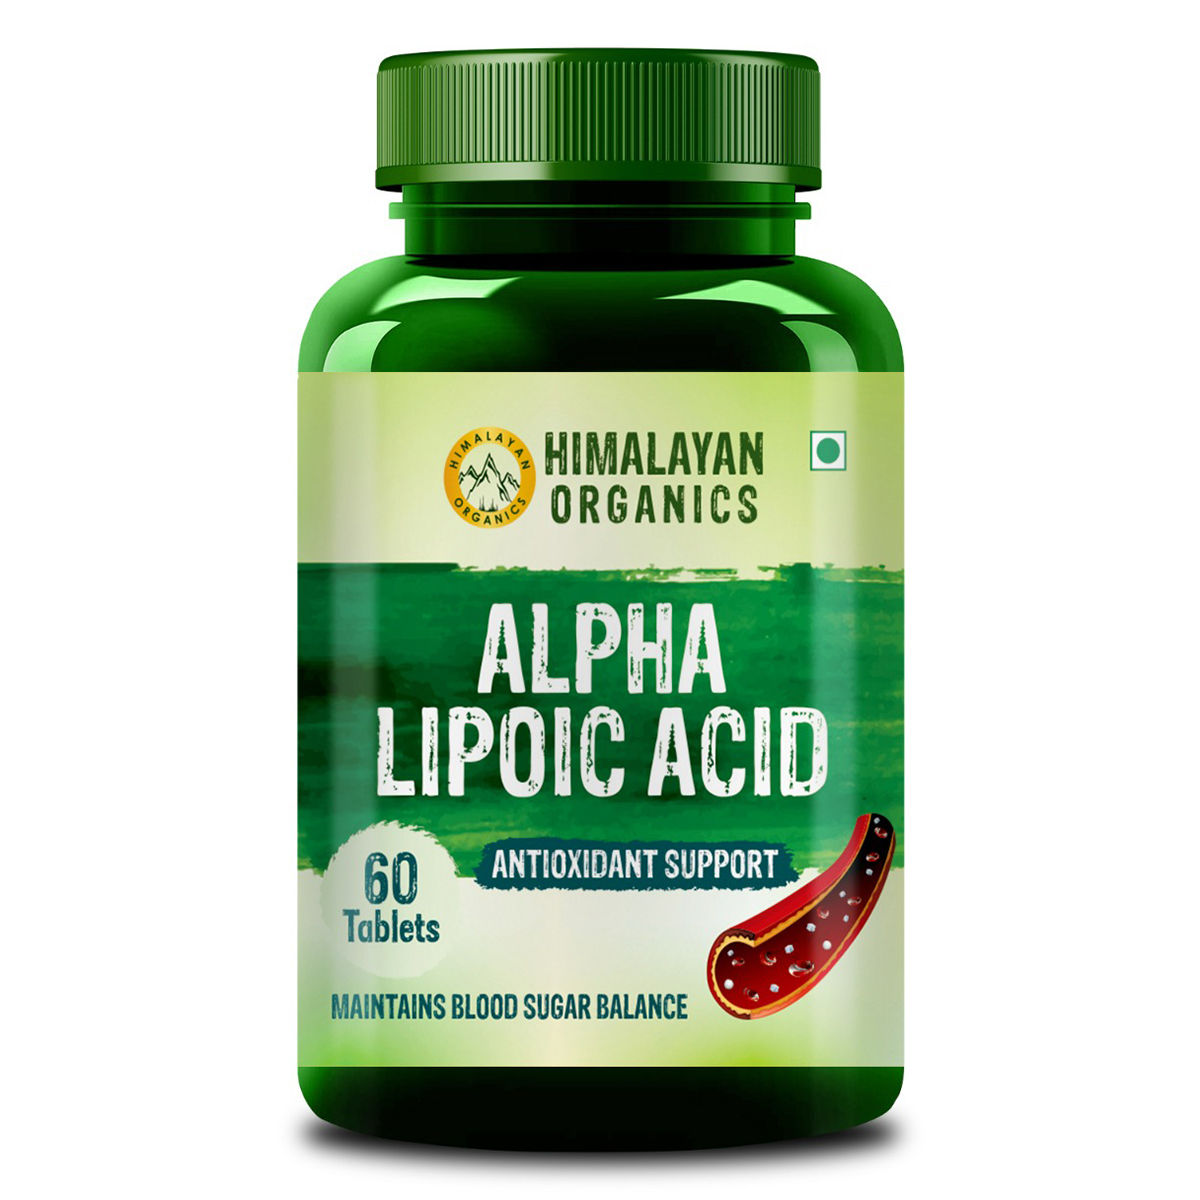 Buy Himalayan Organics Alpha Lipoic Acid, 60 Tablets Online